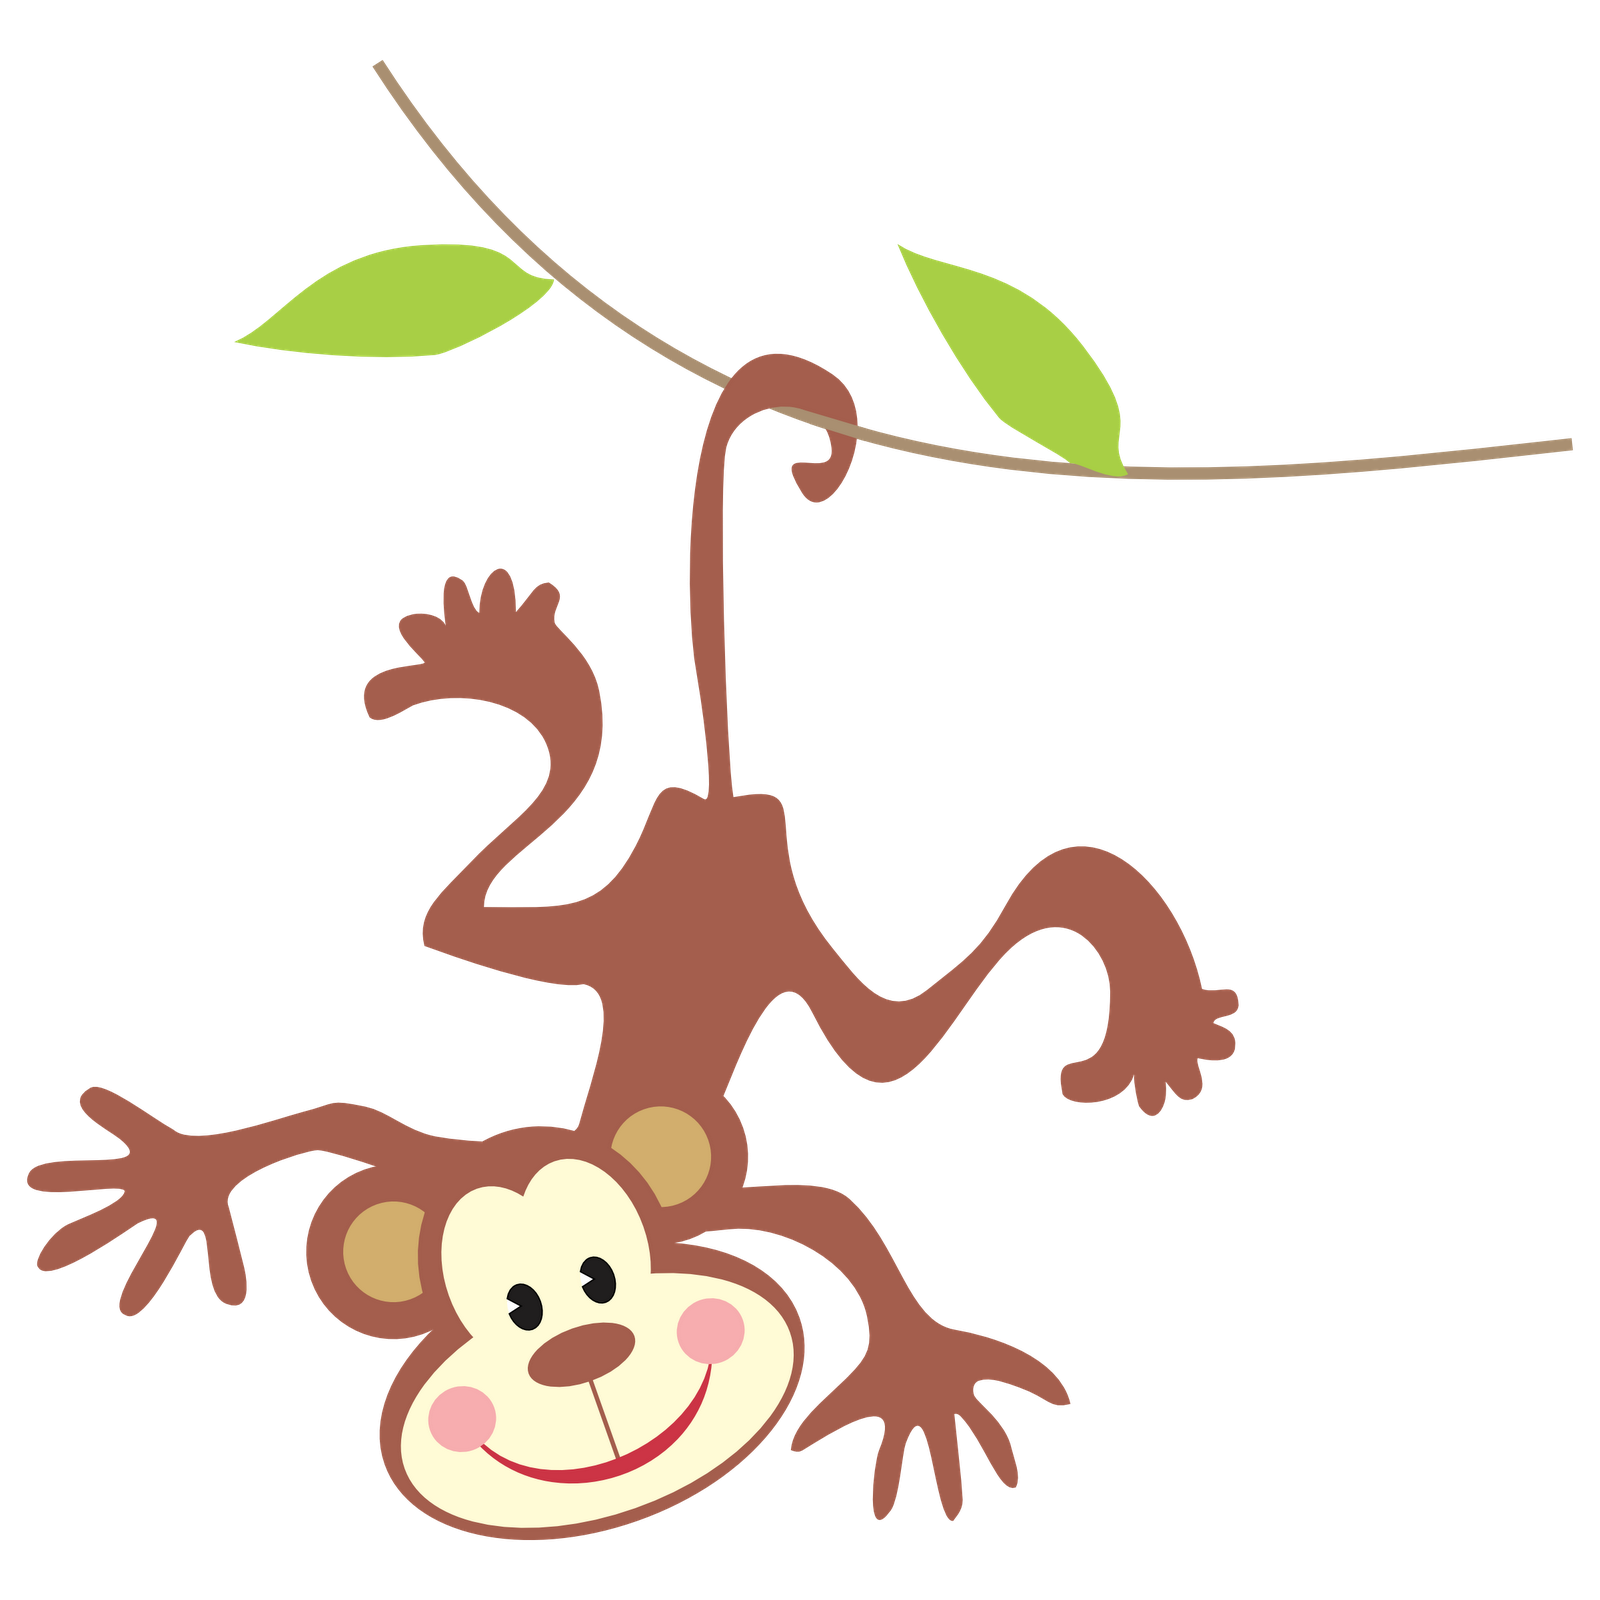 monkey clip art free downloads - photo #2